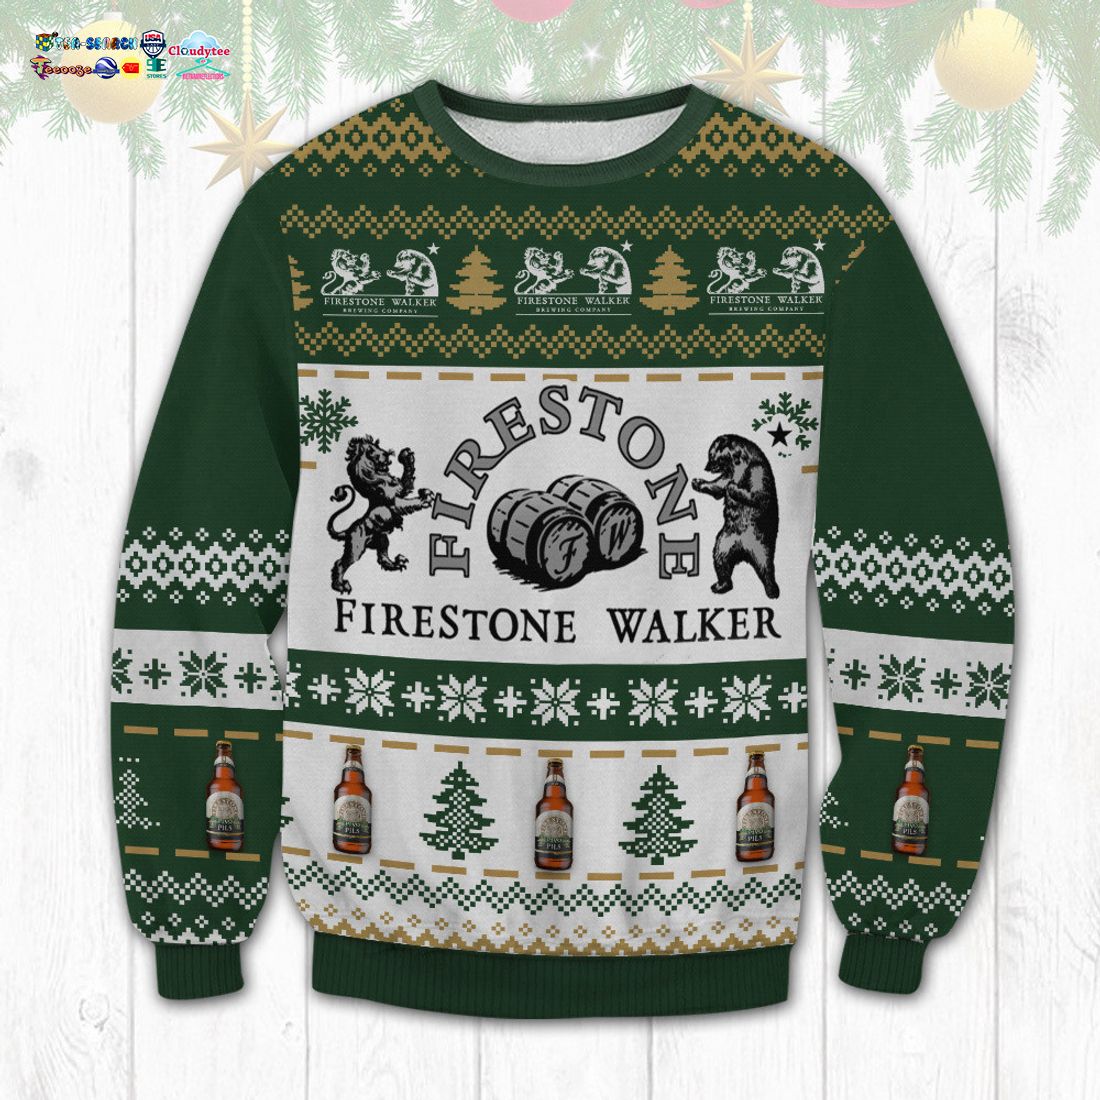 Firestone Walker Ugly Christmas Sweater - Loving, dare I say?